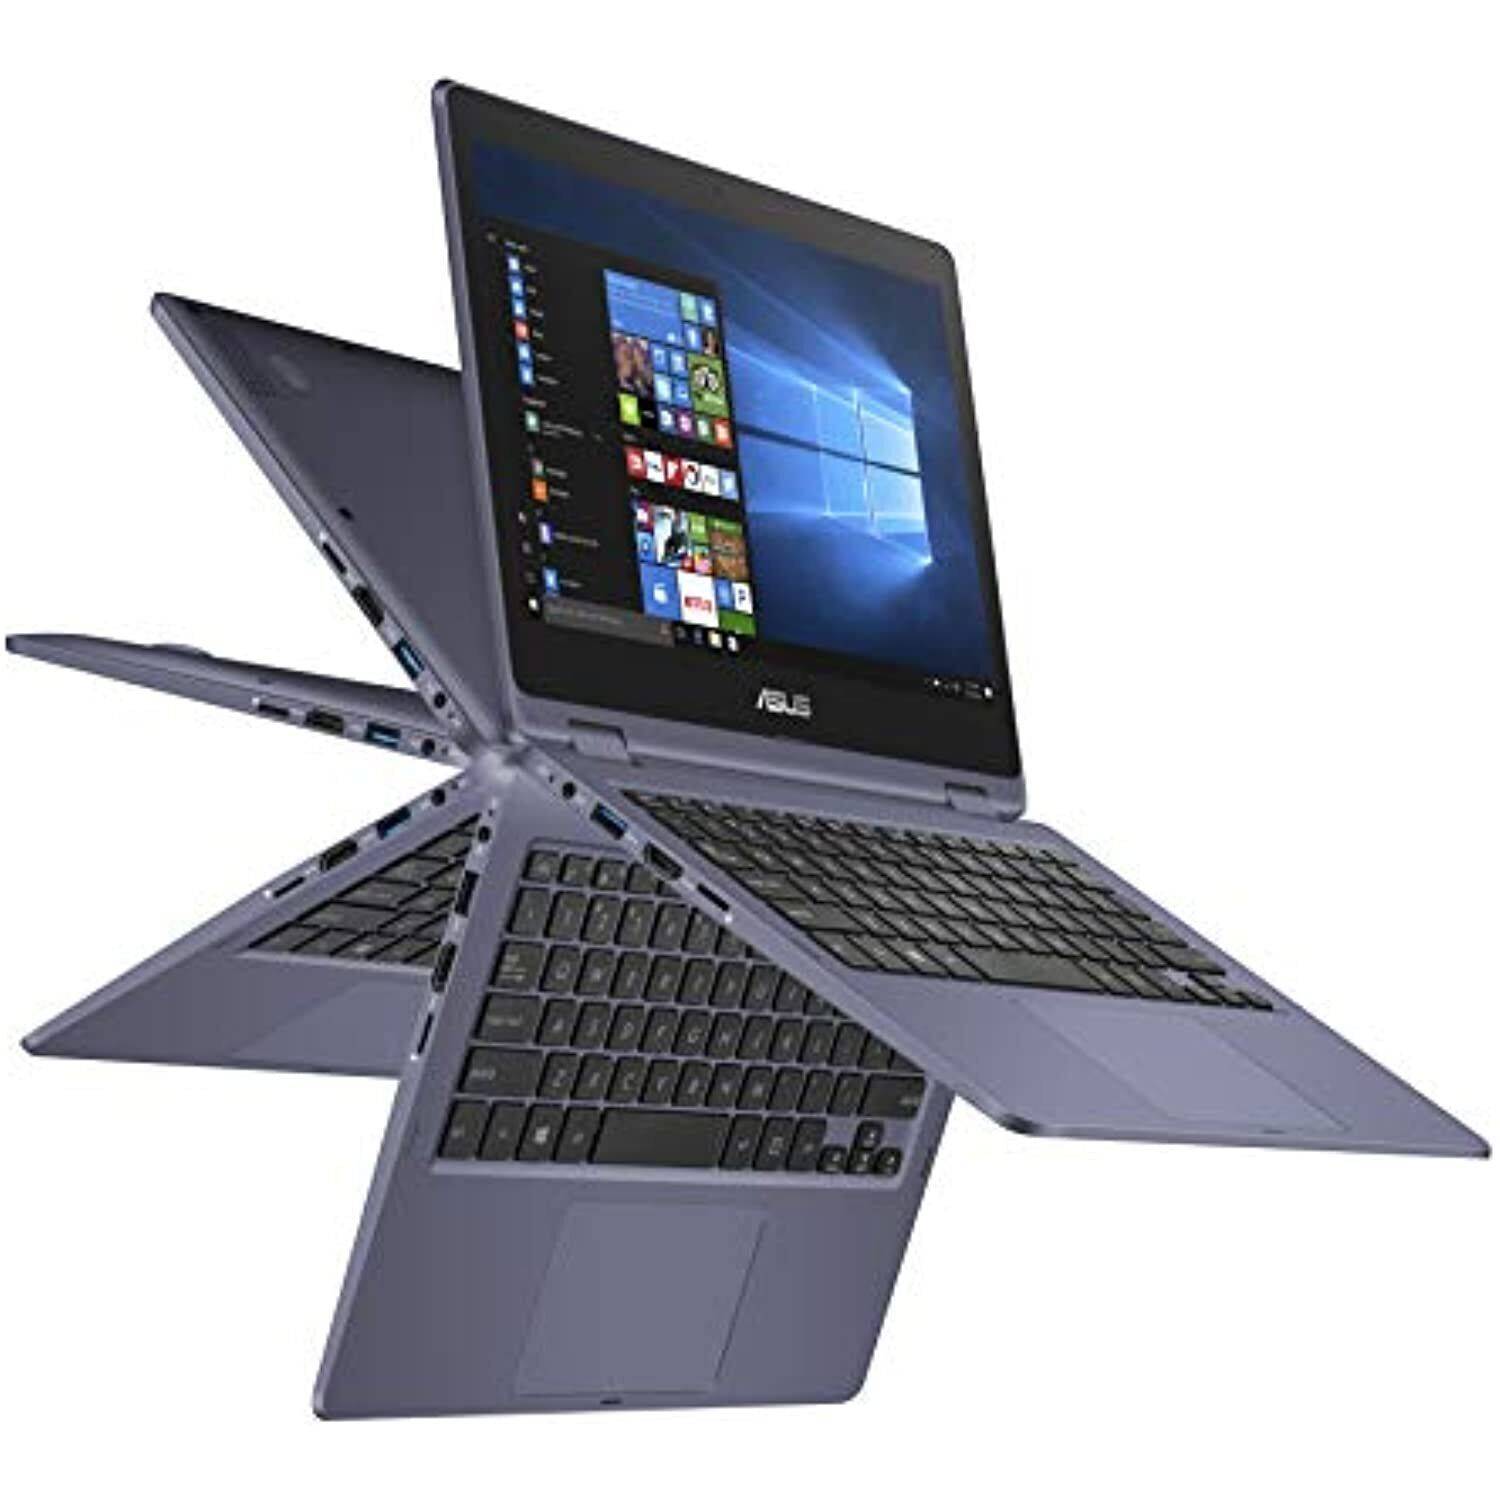 Asus L210 11.6 HD 1366x768 Laptop Intel Celeron N4020 with